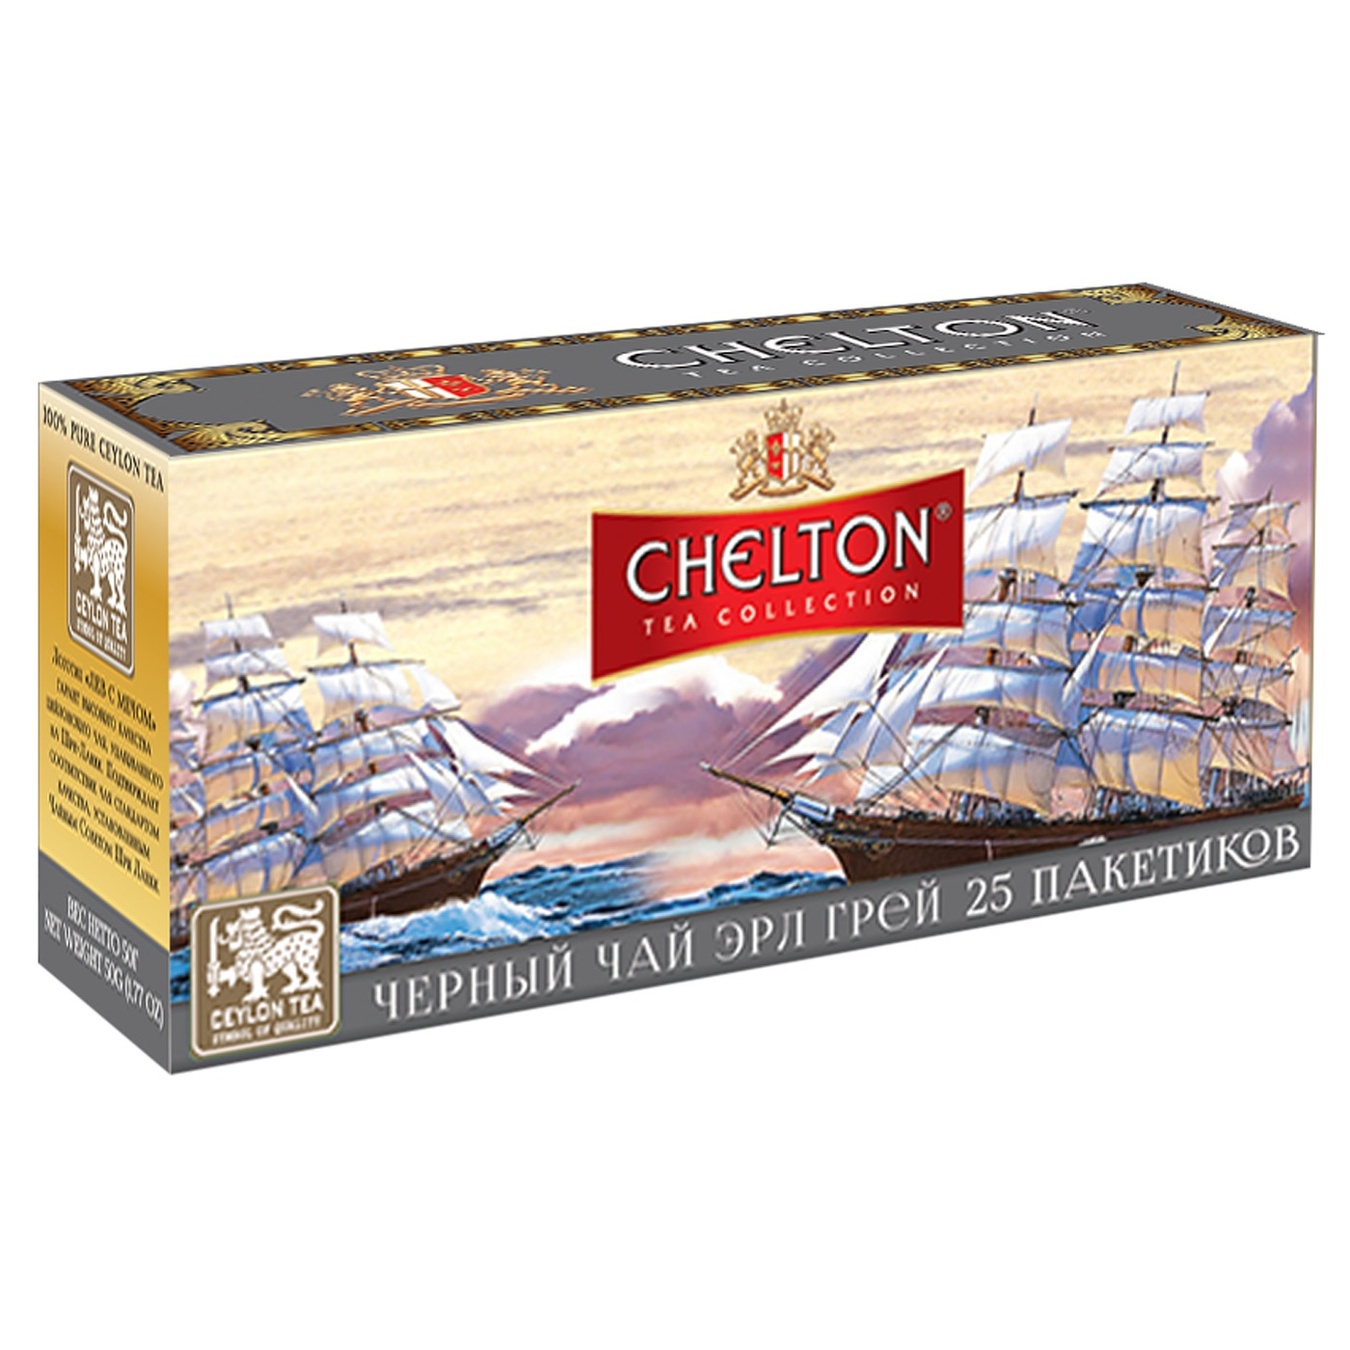 Chelton Black Earl Gray tea 25*1.5g